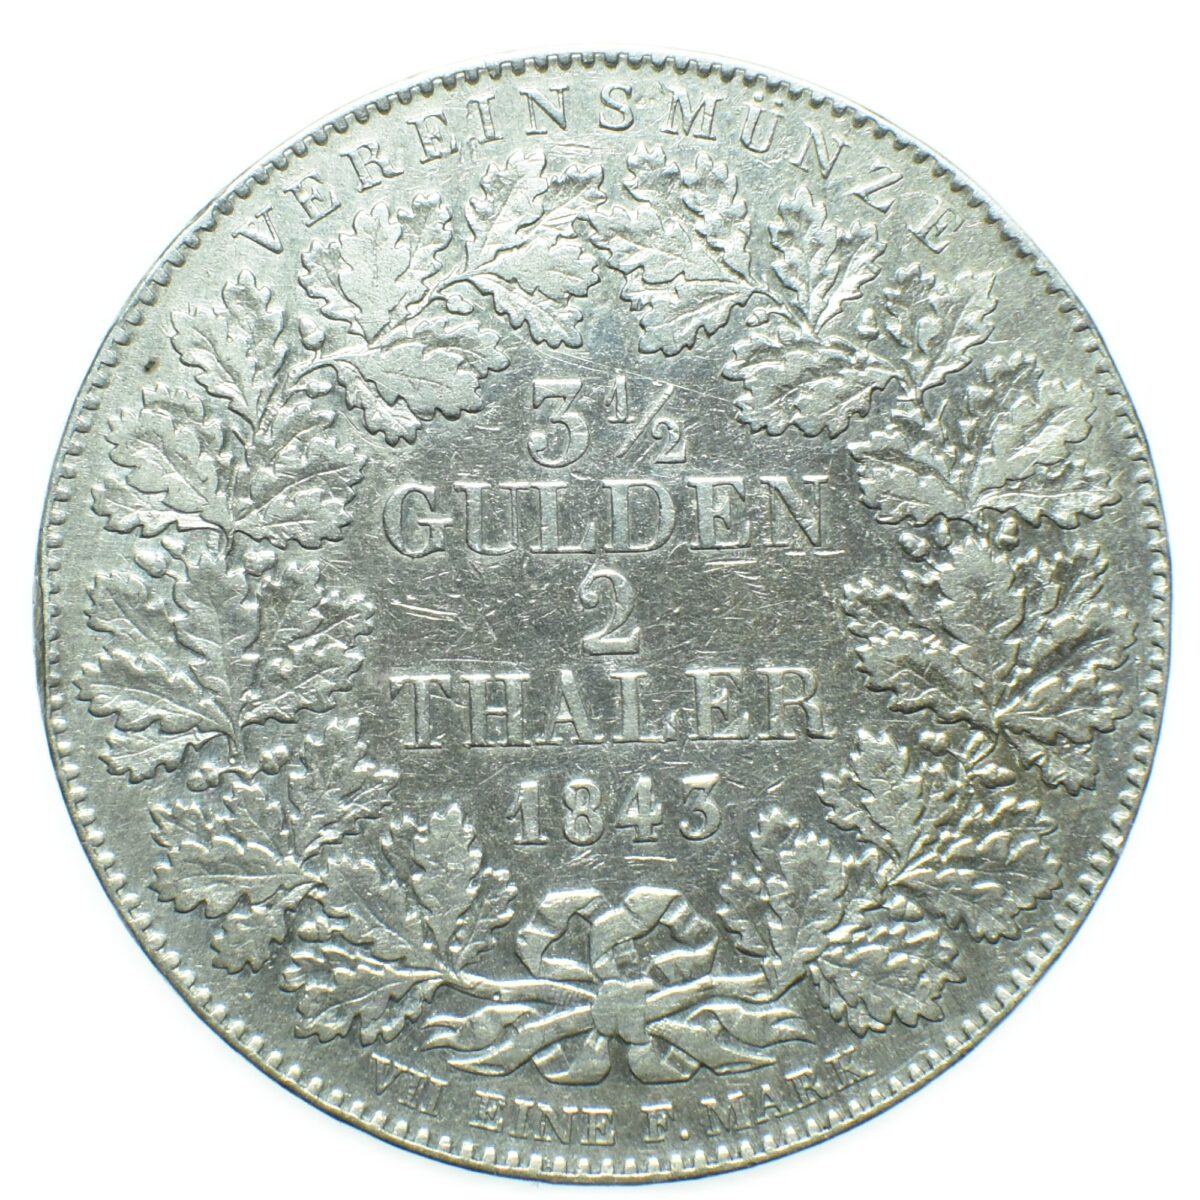 Francfort 2thaler 1843 avers 254